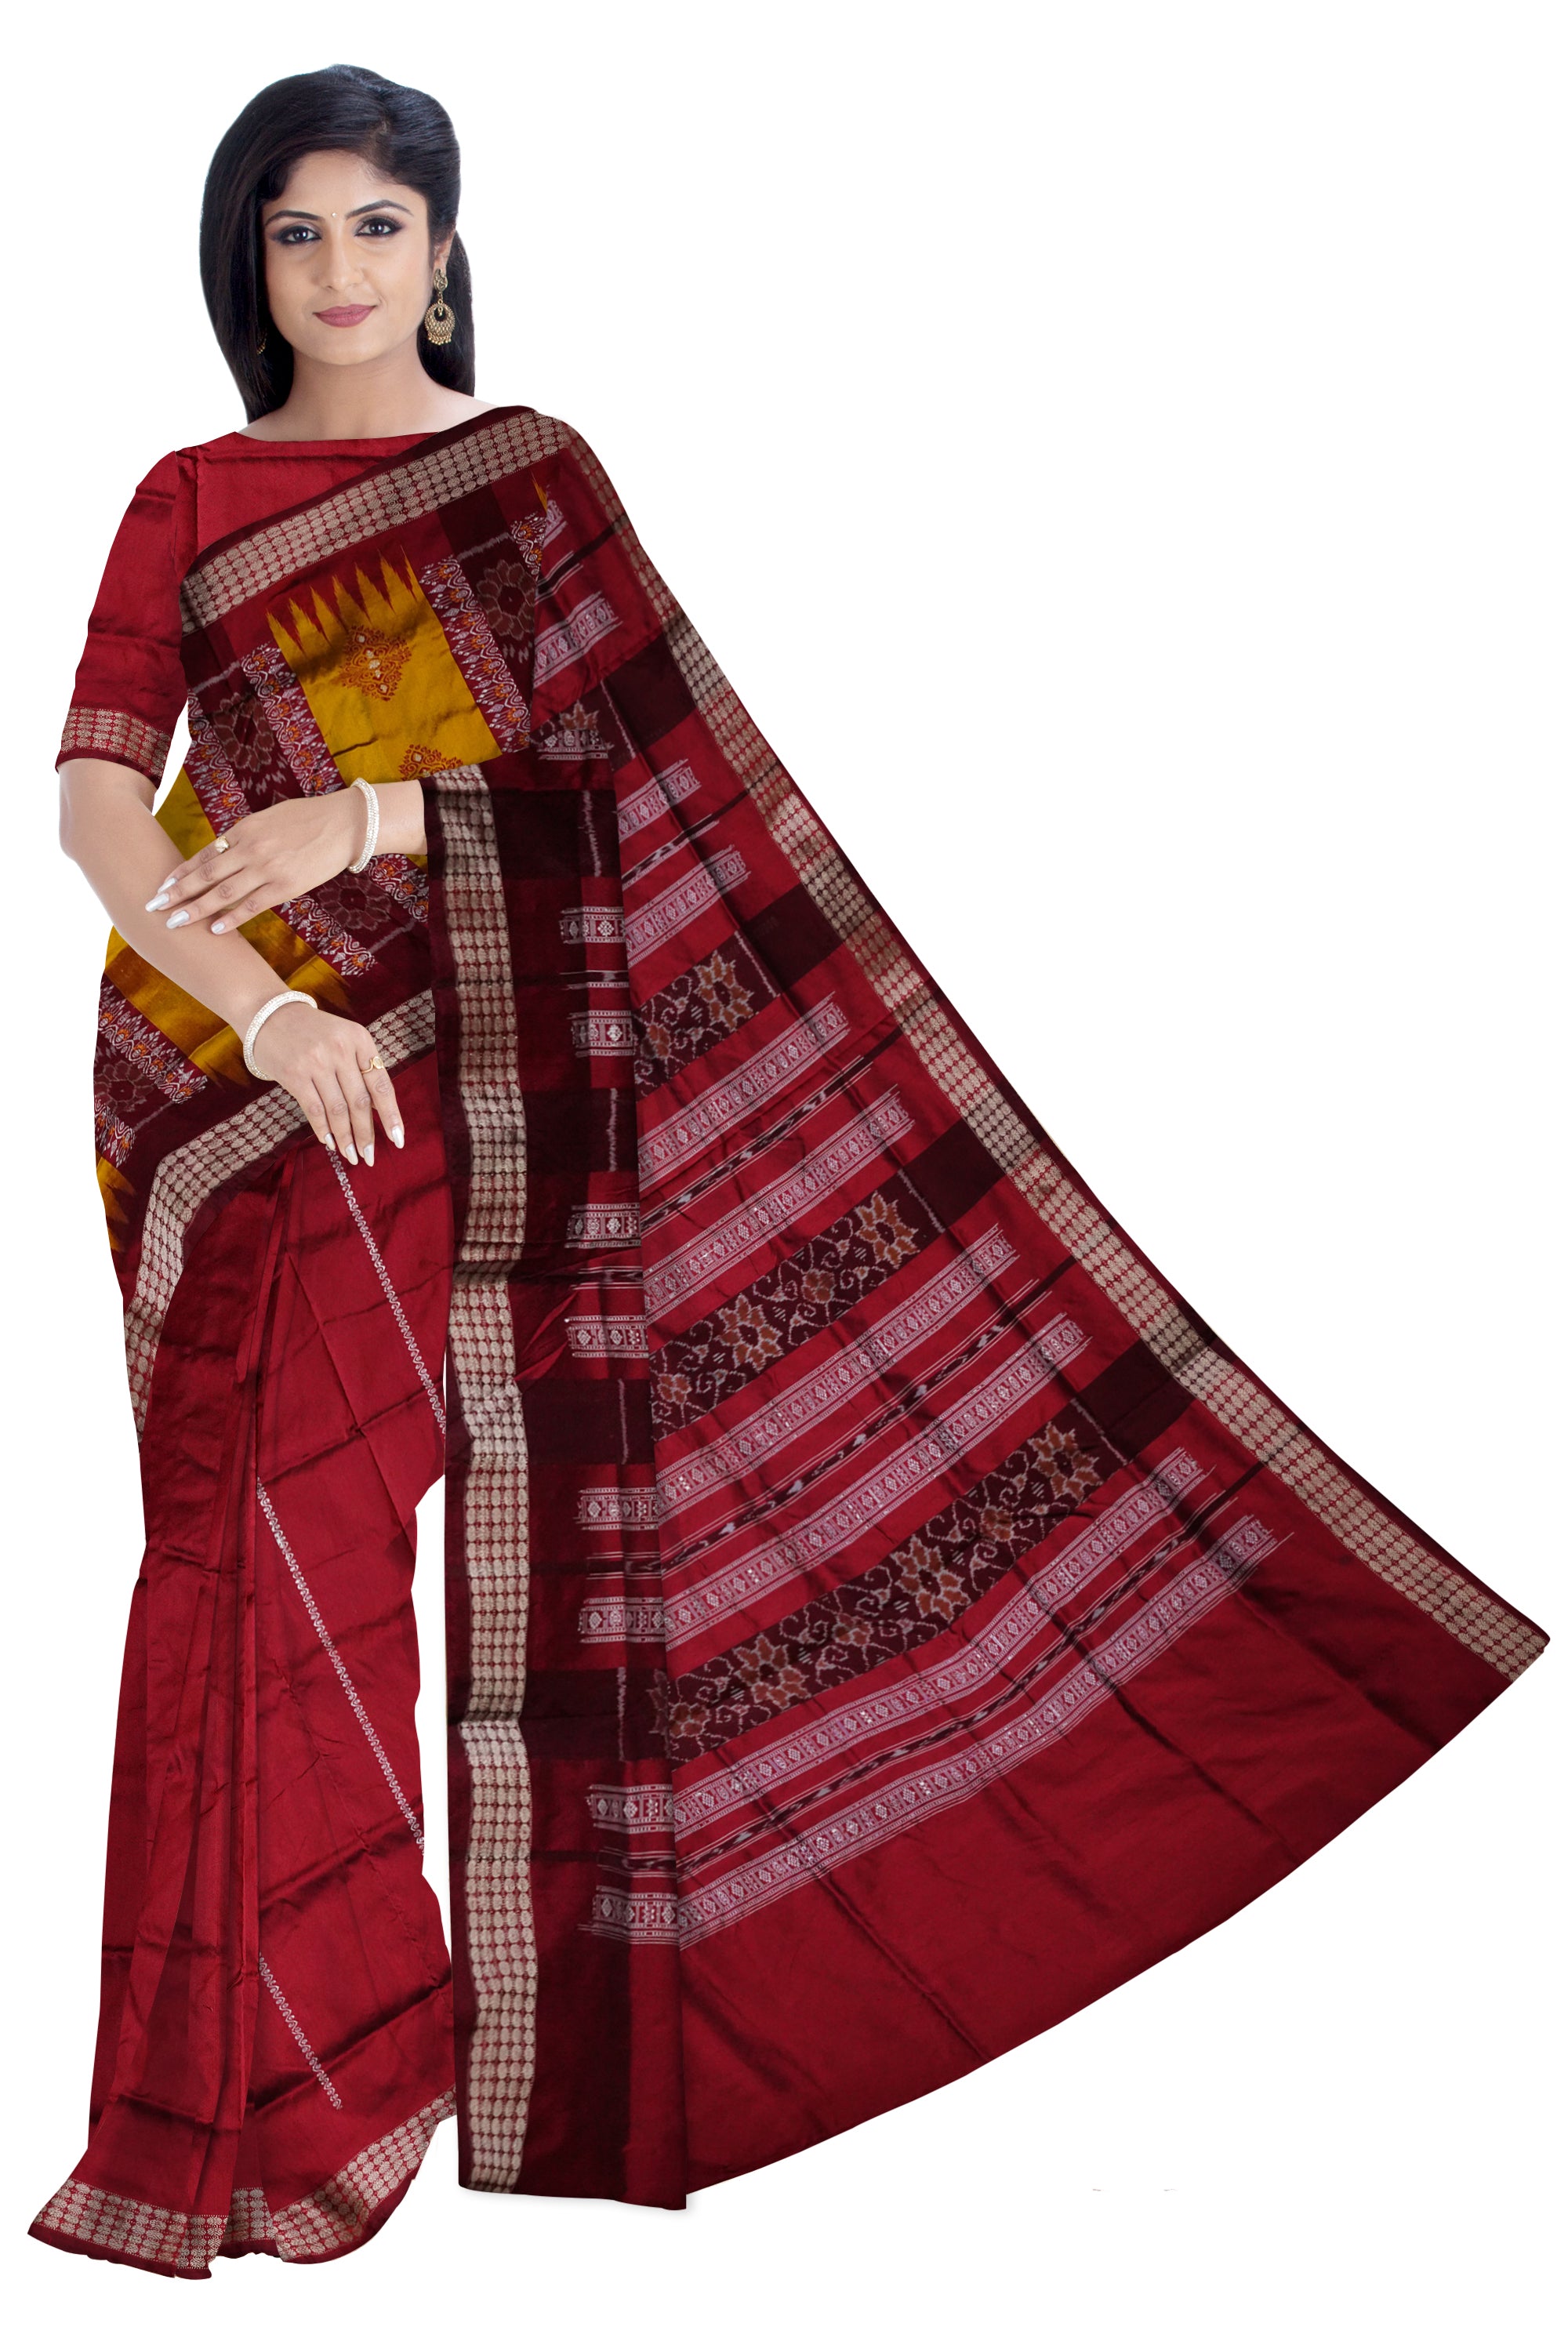 Latest Patli design Yellow and Maroon color Pata saree. - Koshali Arts & Crafts Enterprise